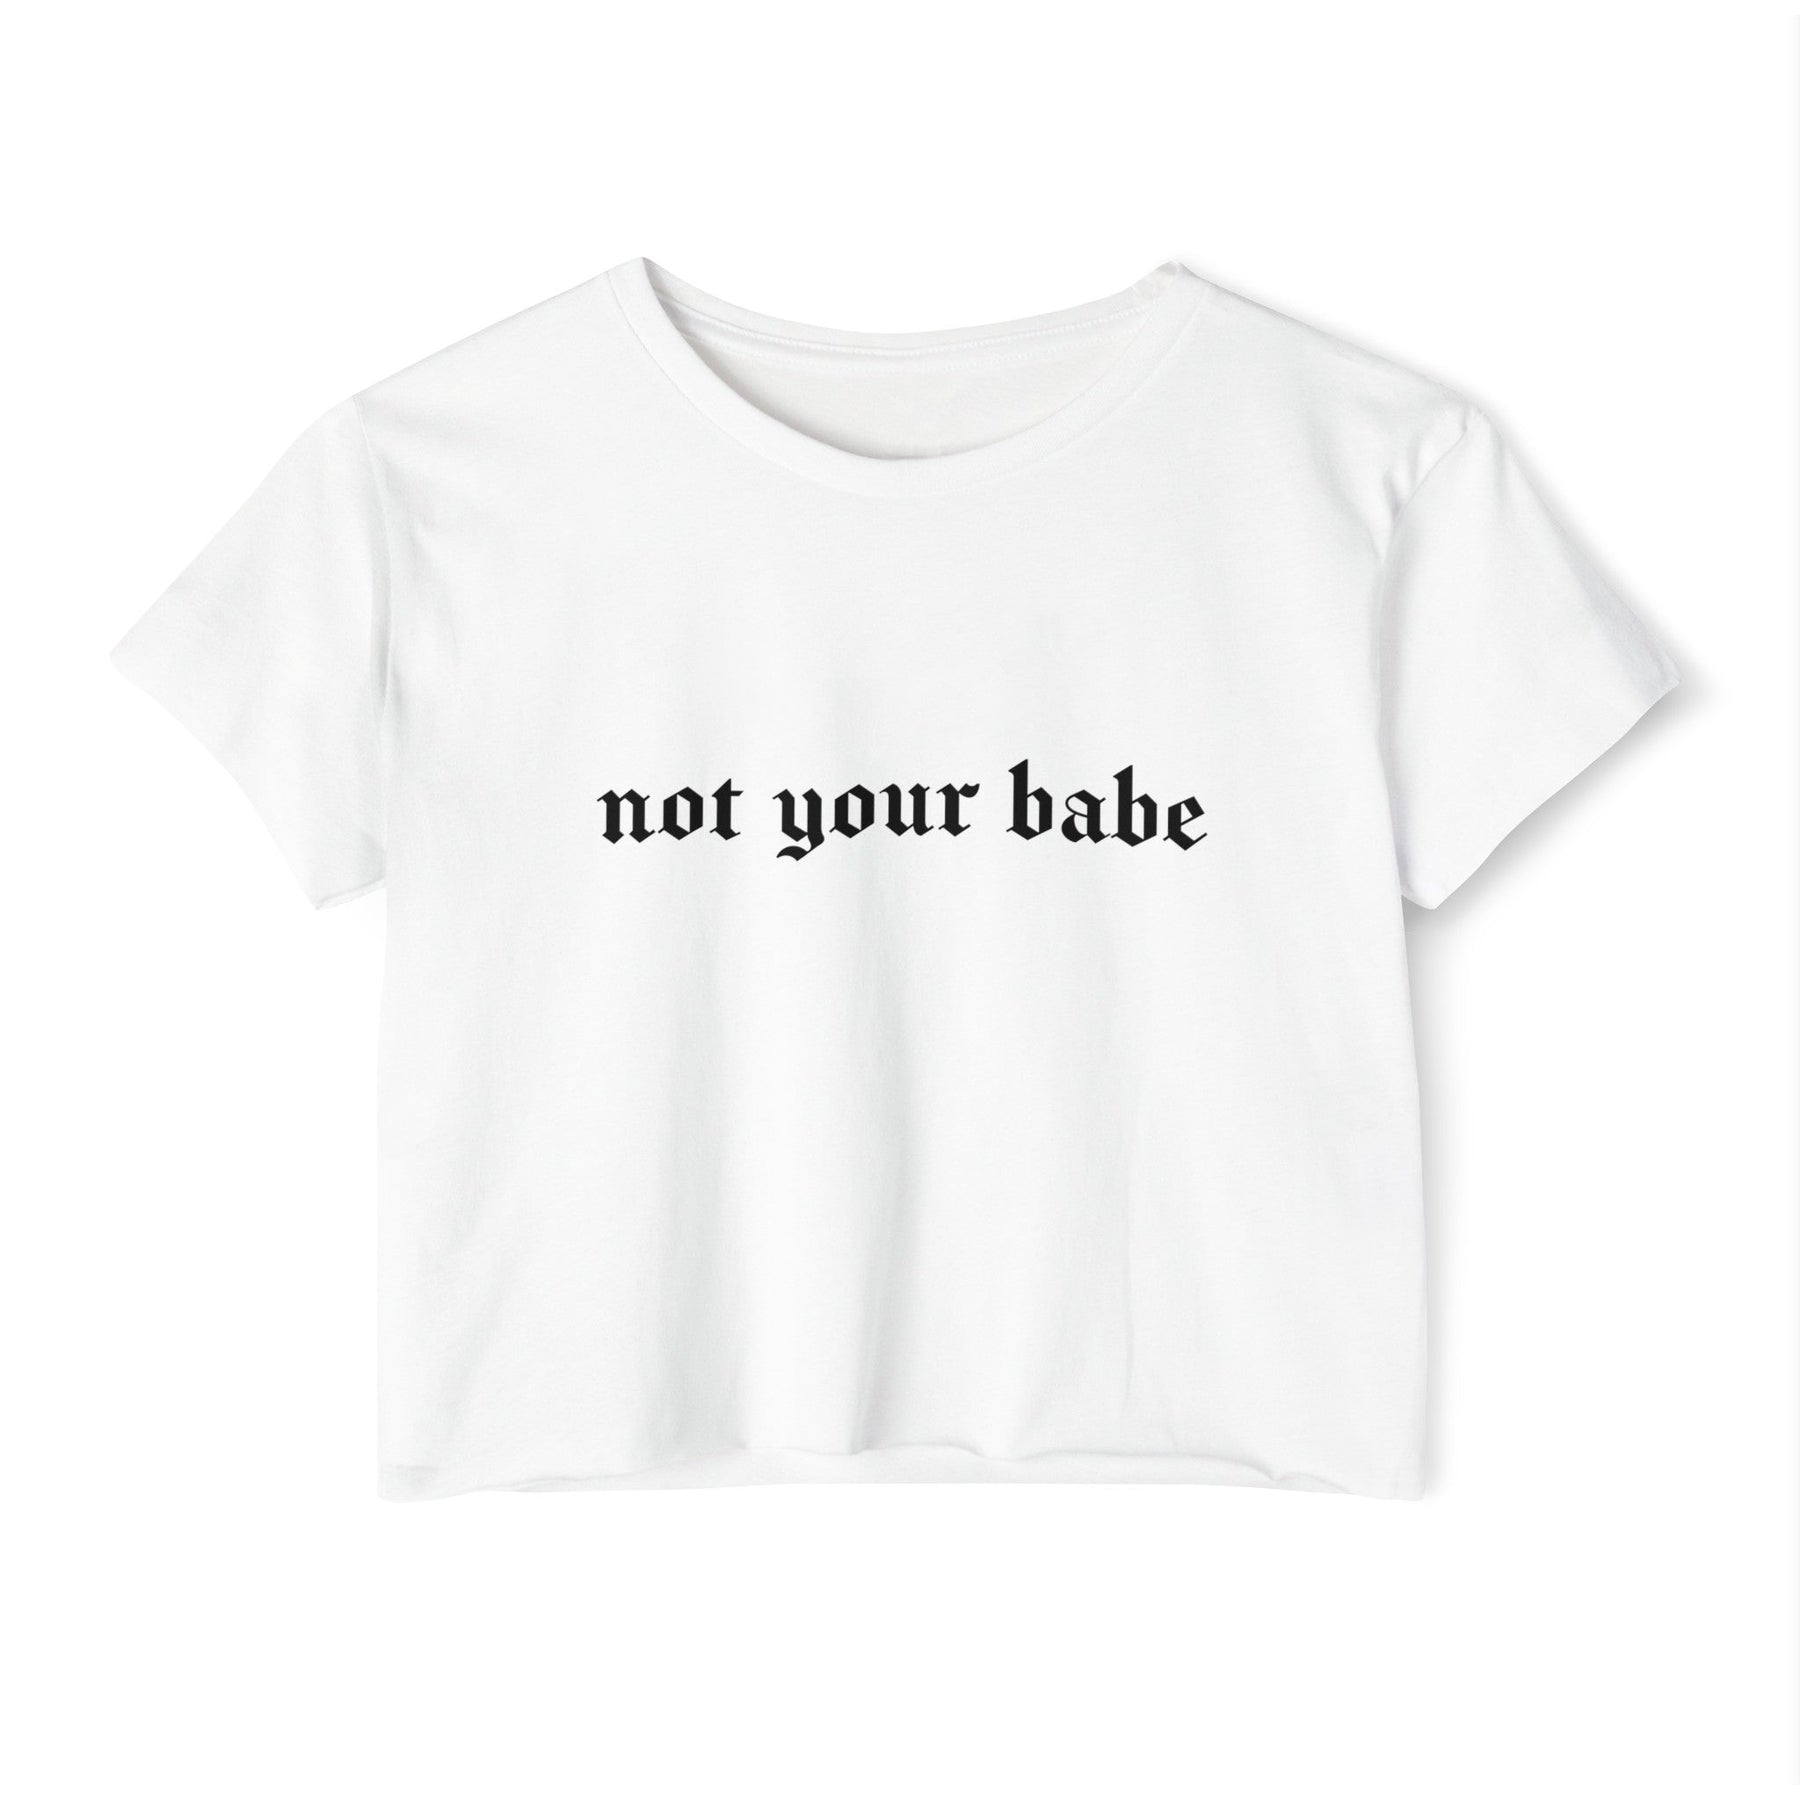 Not Your Babe Women's Lightweight Crop Top - Goth Cloth Co.T - Shirt31362934751351329246